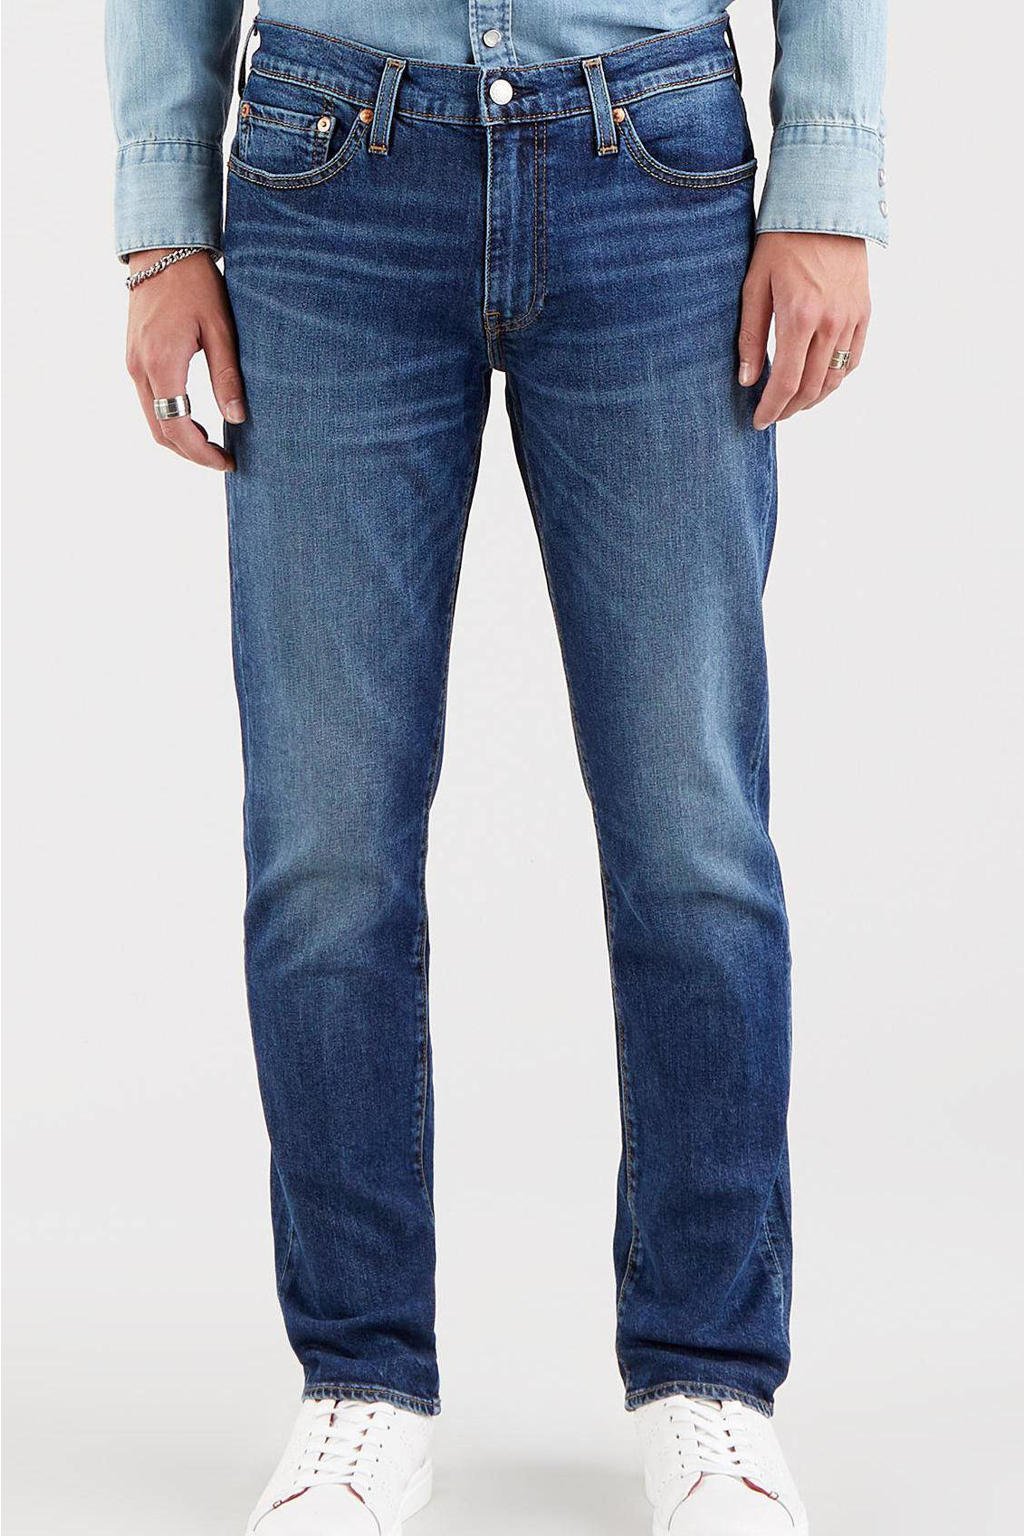 Levi's 511 slim fit jeans band wagon adv